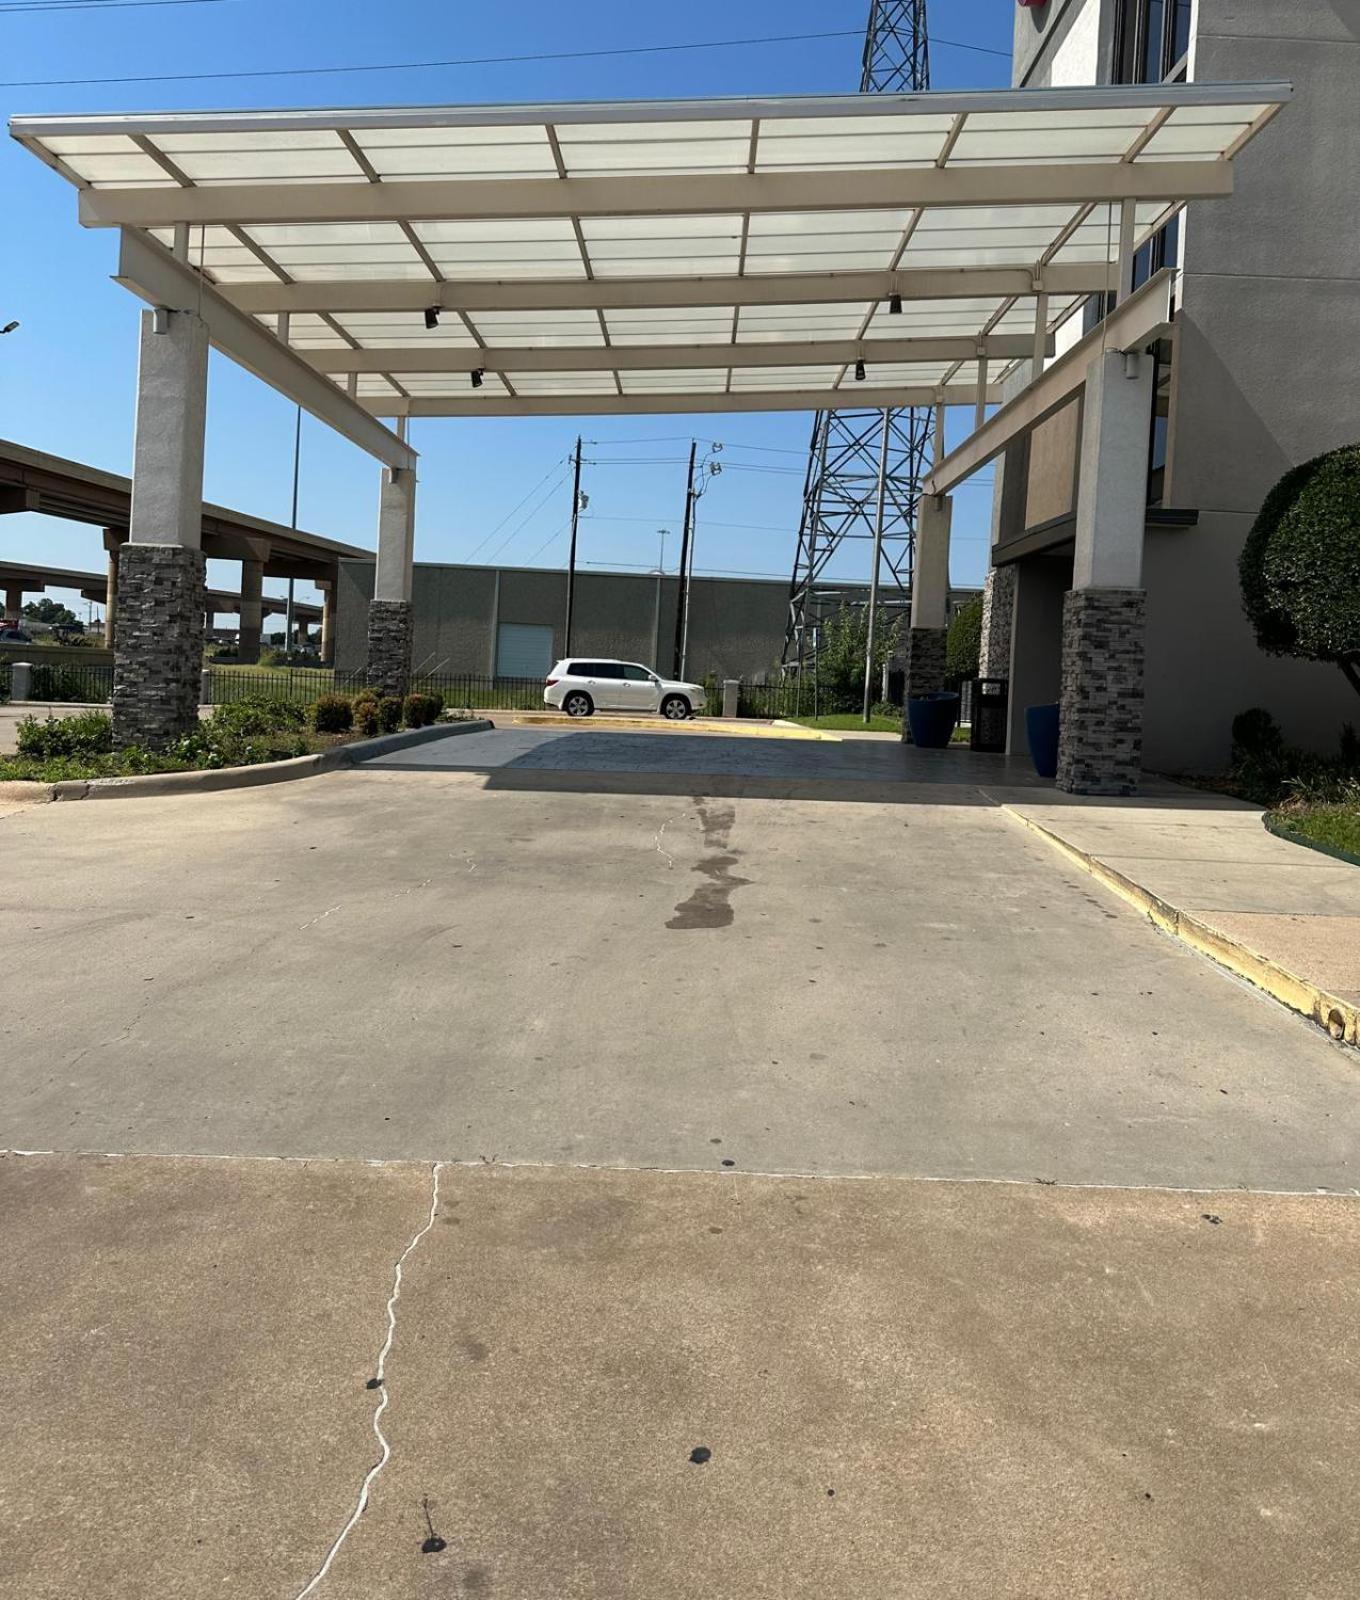 Comfort Inn Dallas North Love Field Airport Exterior foto